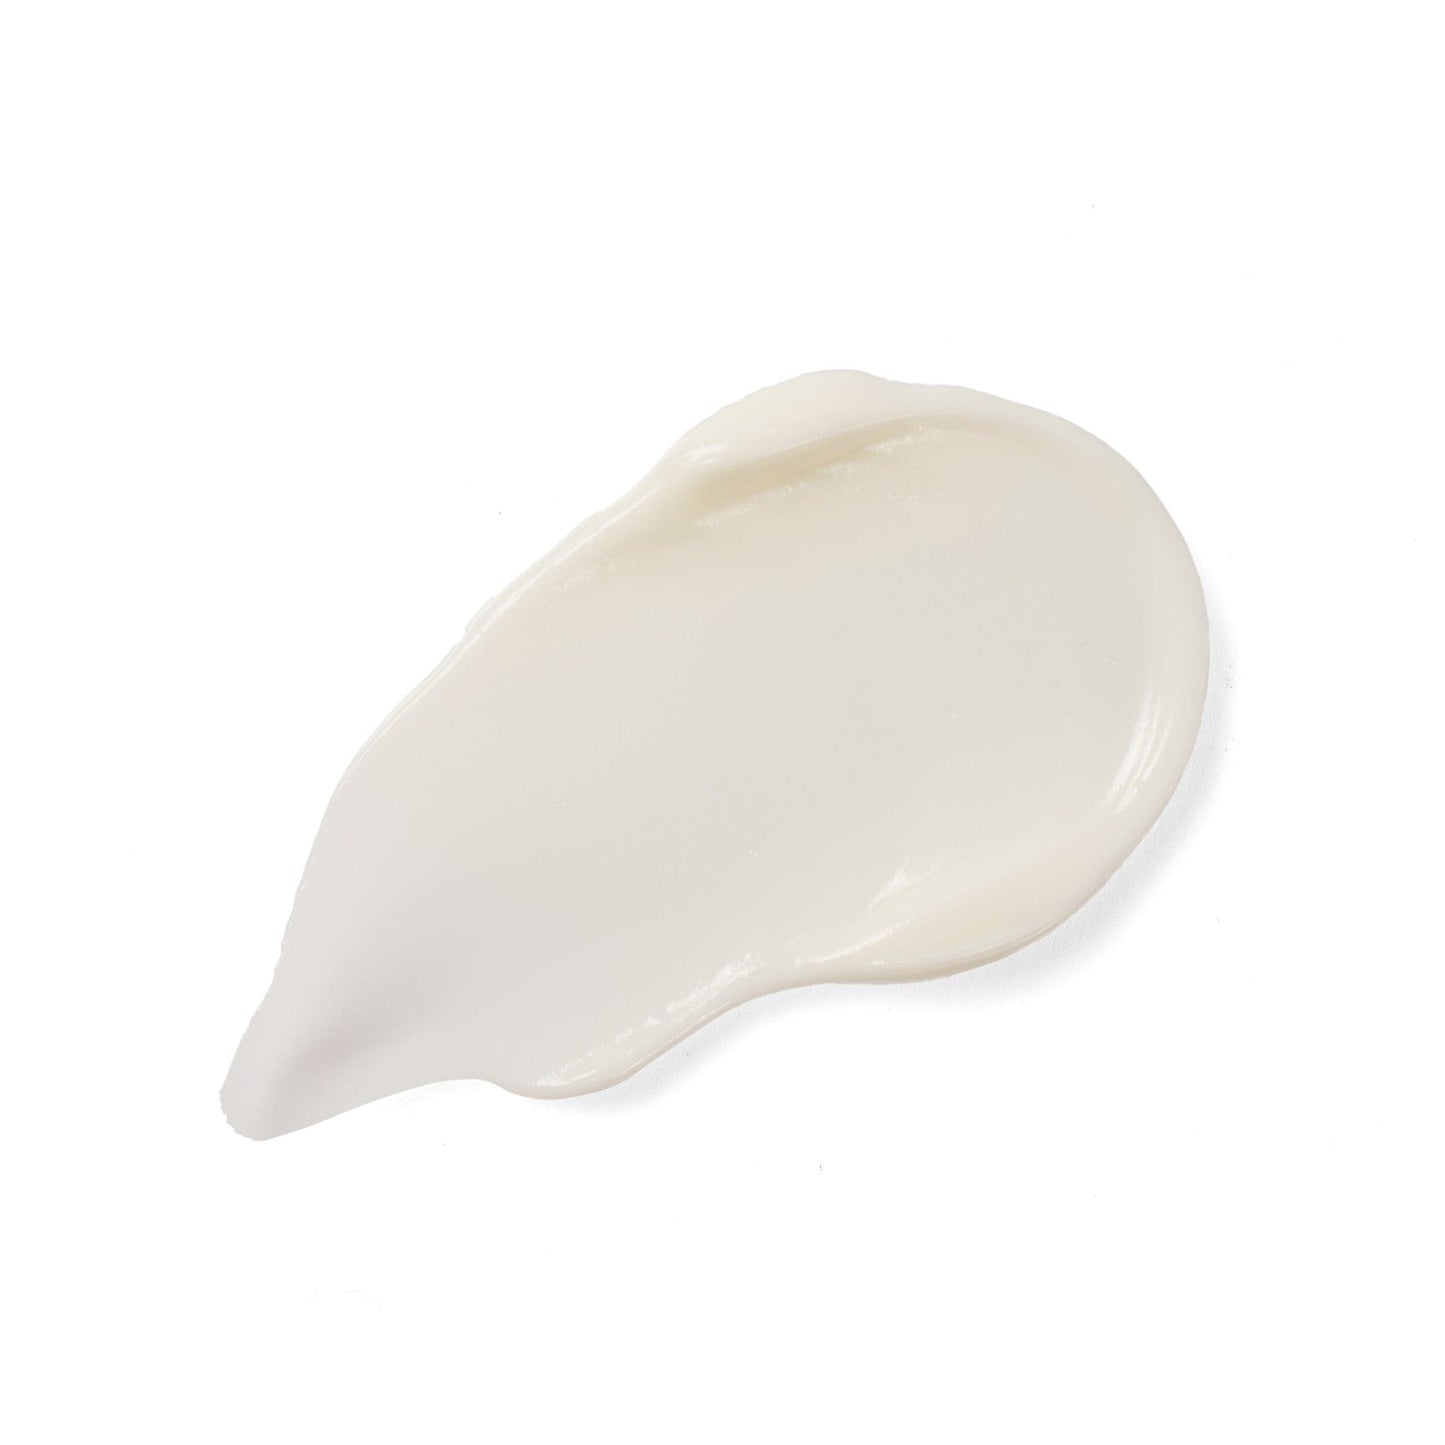 DORIS DAY MD SKINCARE Face 62.1 ml |  2.1 FL OZ Ultra Rich Peptide Renewal Cream